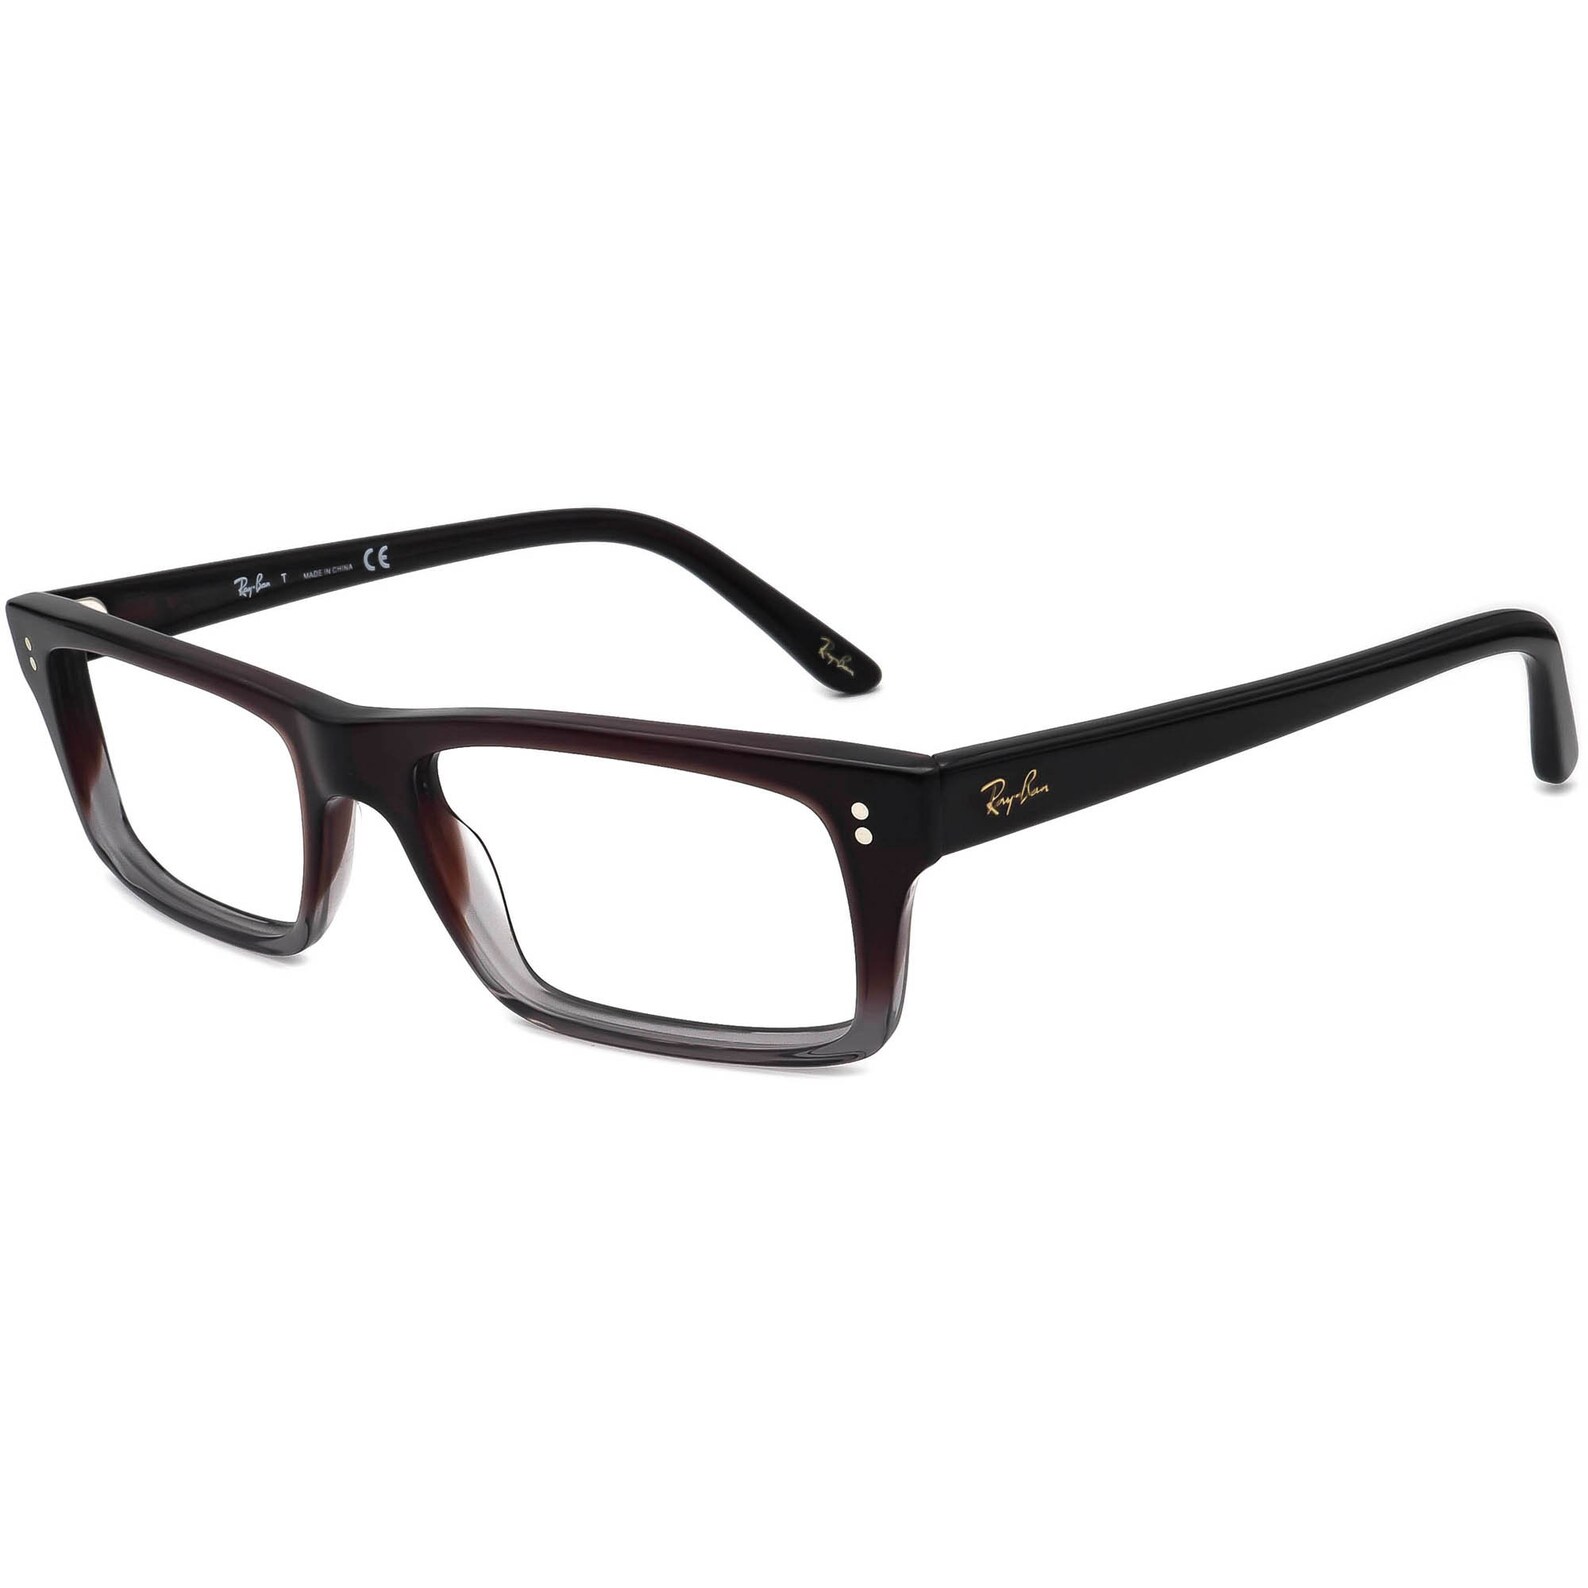 Ray-Ban Eyeglasses RB 5237 5055 Brown/Gray Rectangular Frame | Etsy